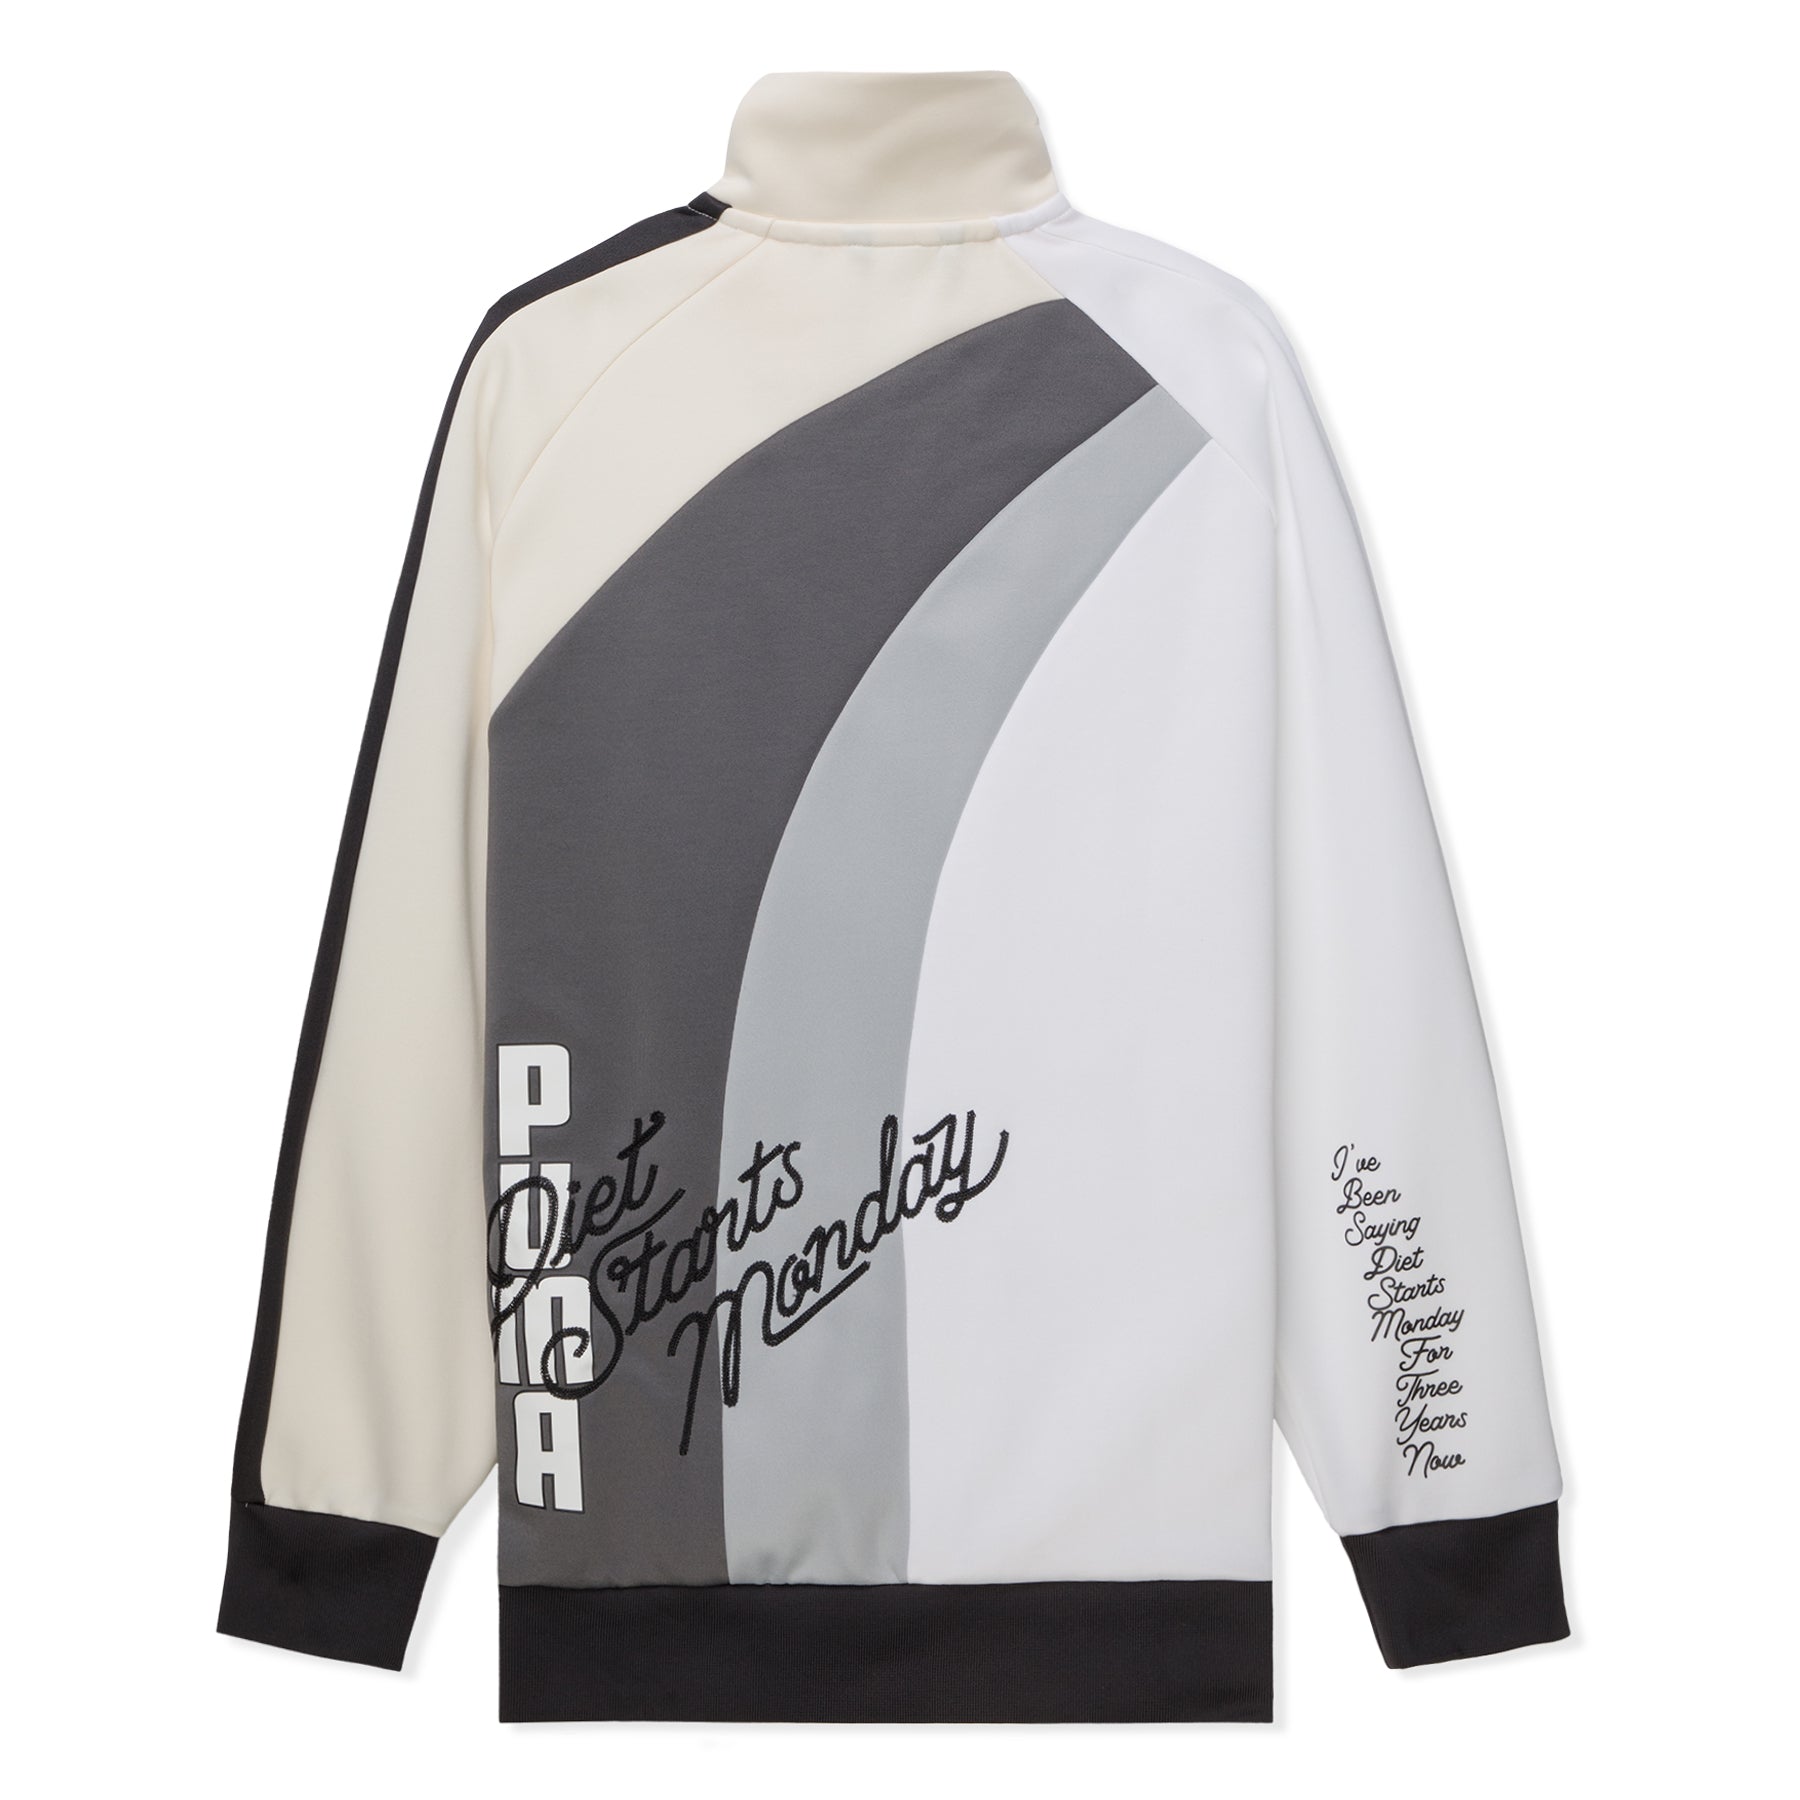 Puma x Diet – (White) Concepts Jacket Starts T7 Monday